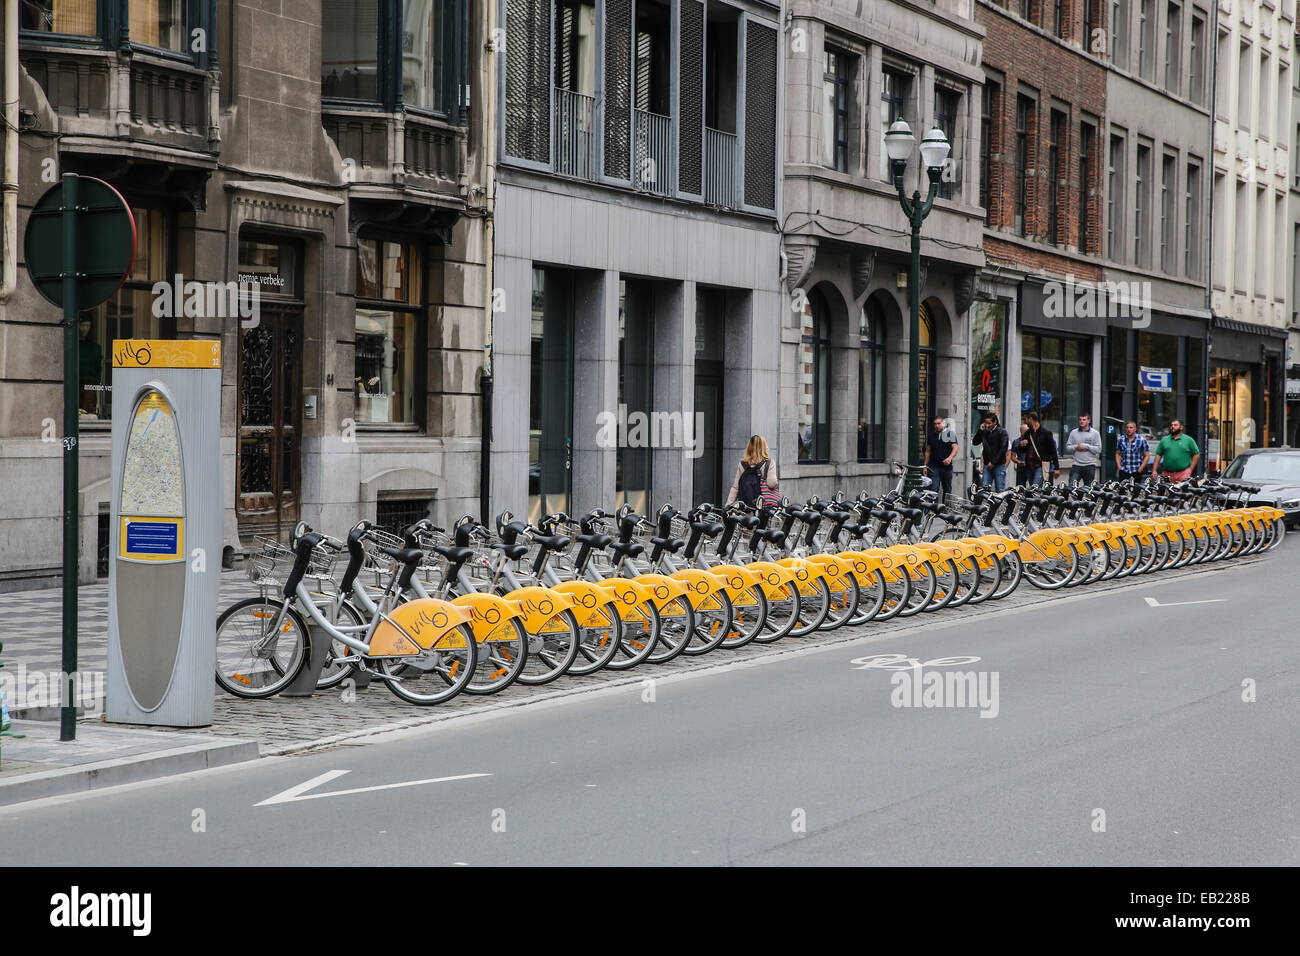 Pubblico noleggio bici Bruxelles Belgio europa Foto Stock